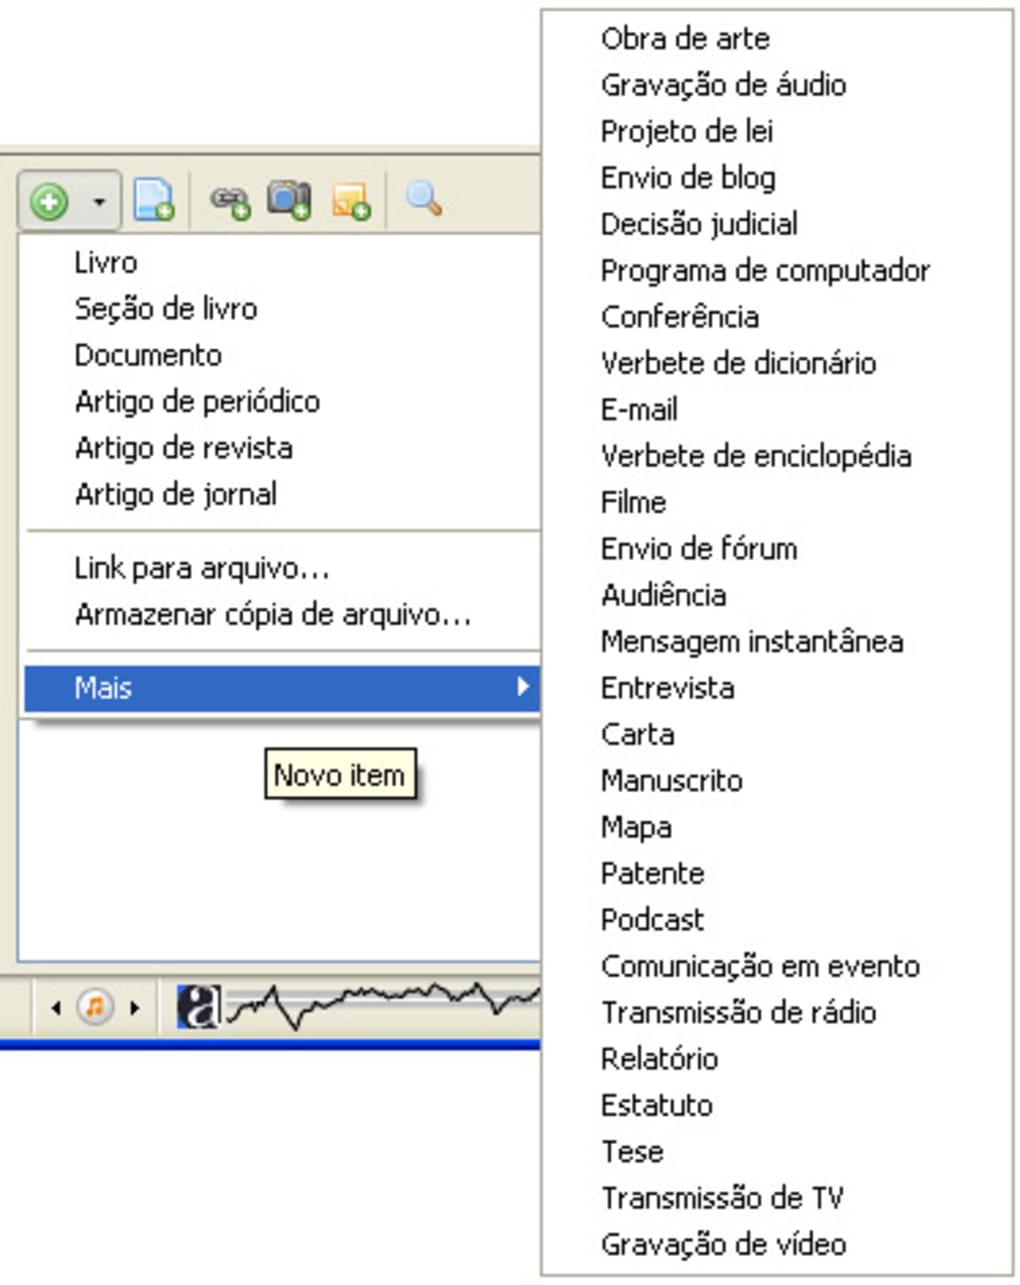 free for mac download Zotero 6.0.27